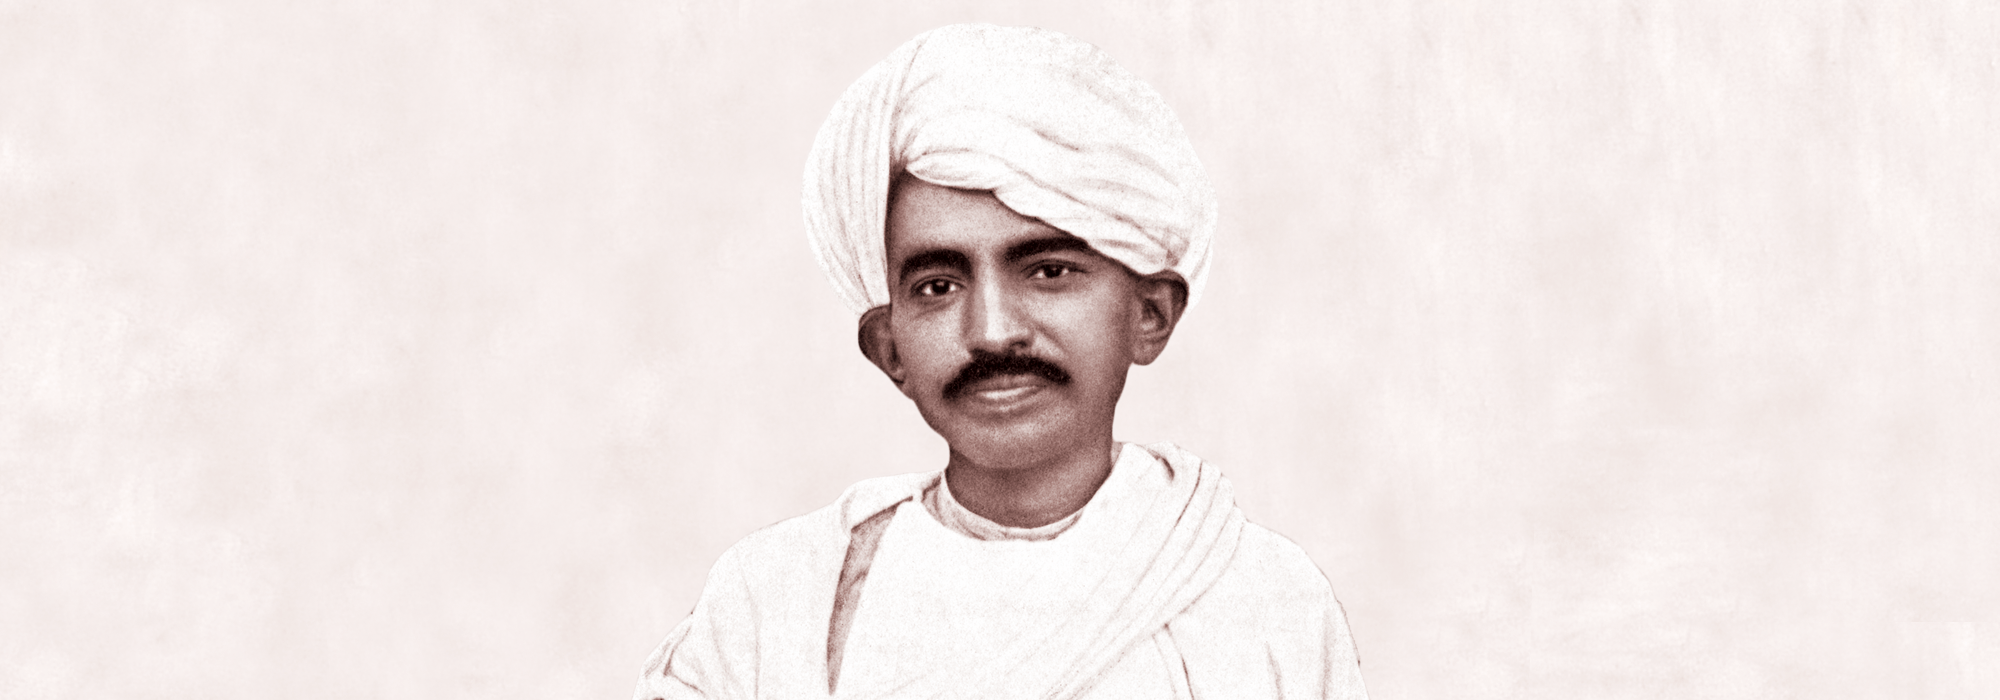 Gandhi at age 46 back in India